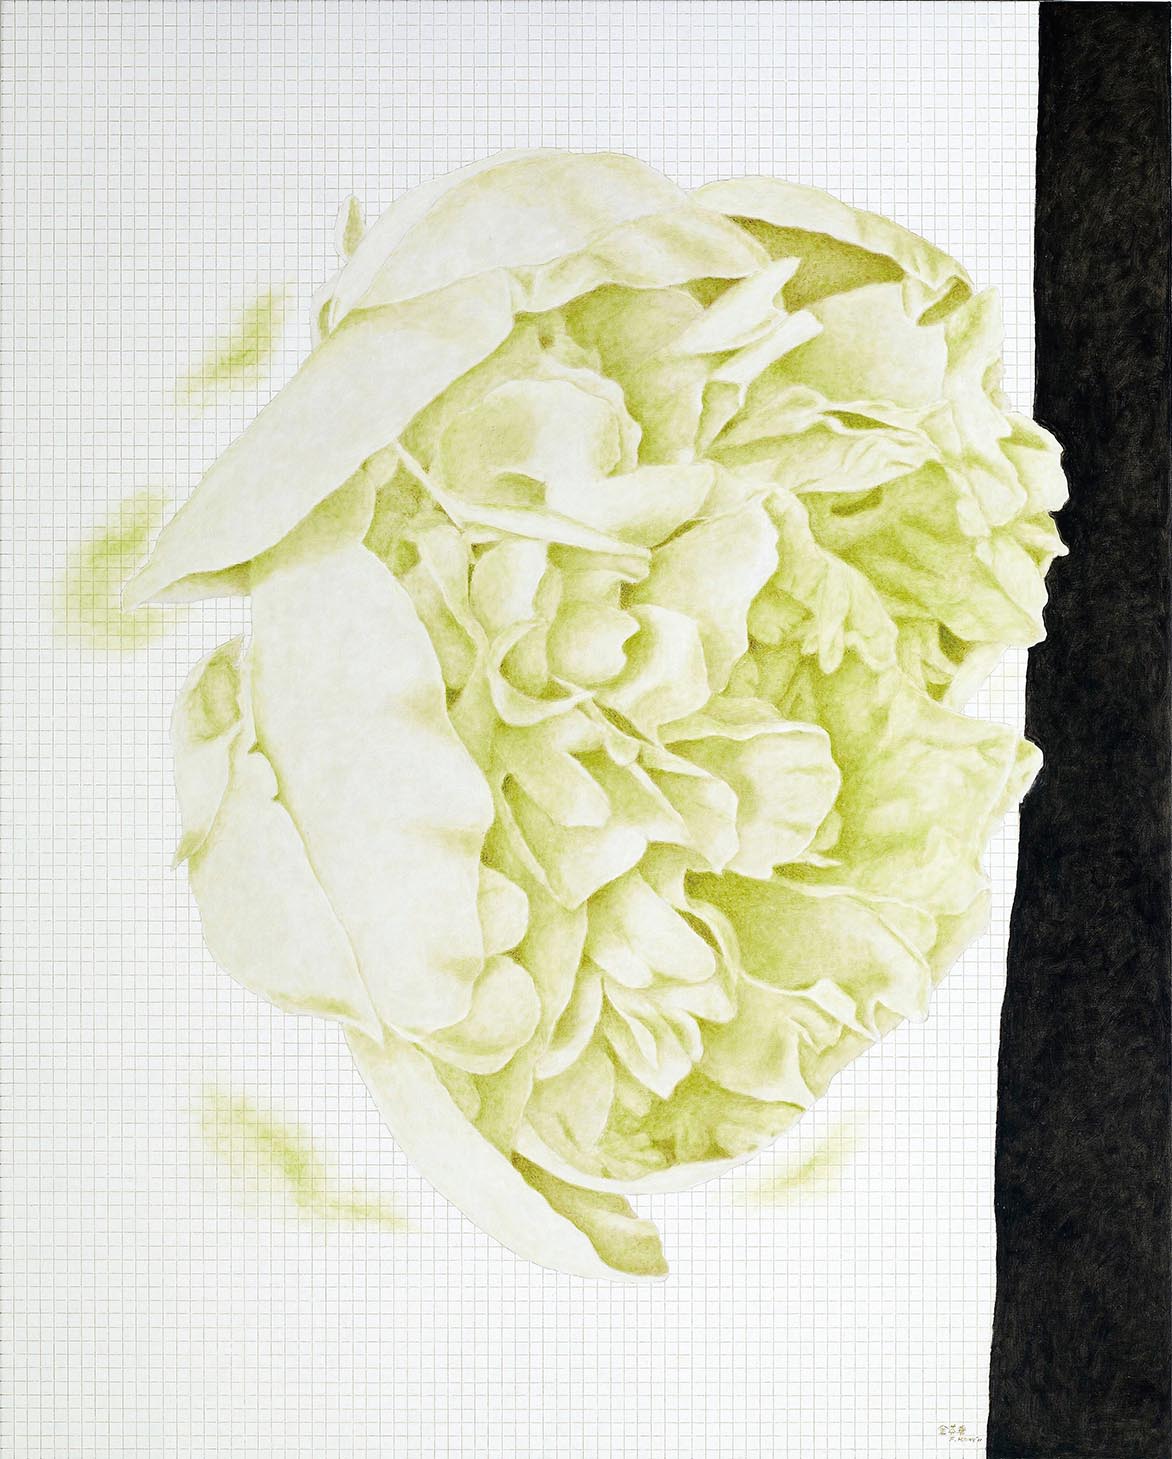 Flower III Oil on canvas 162x130cm